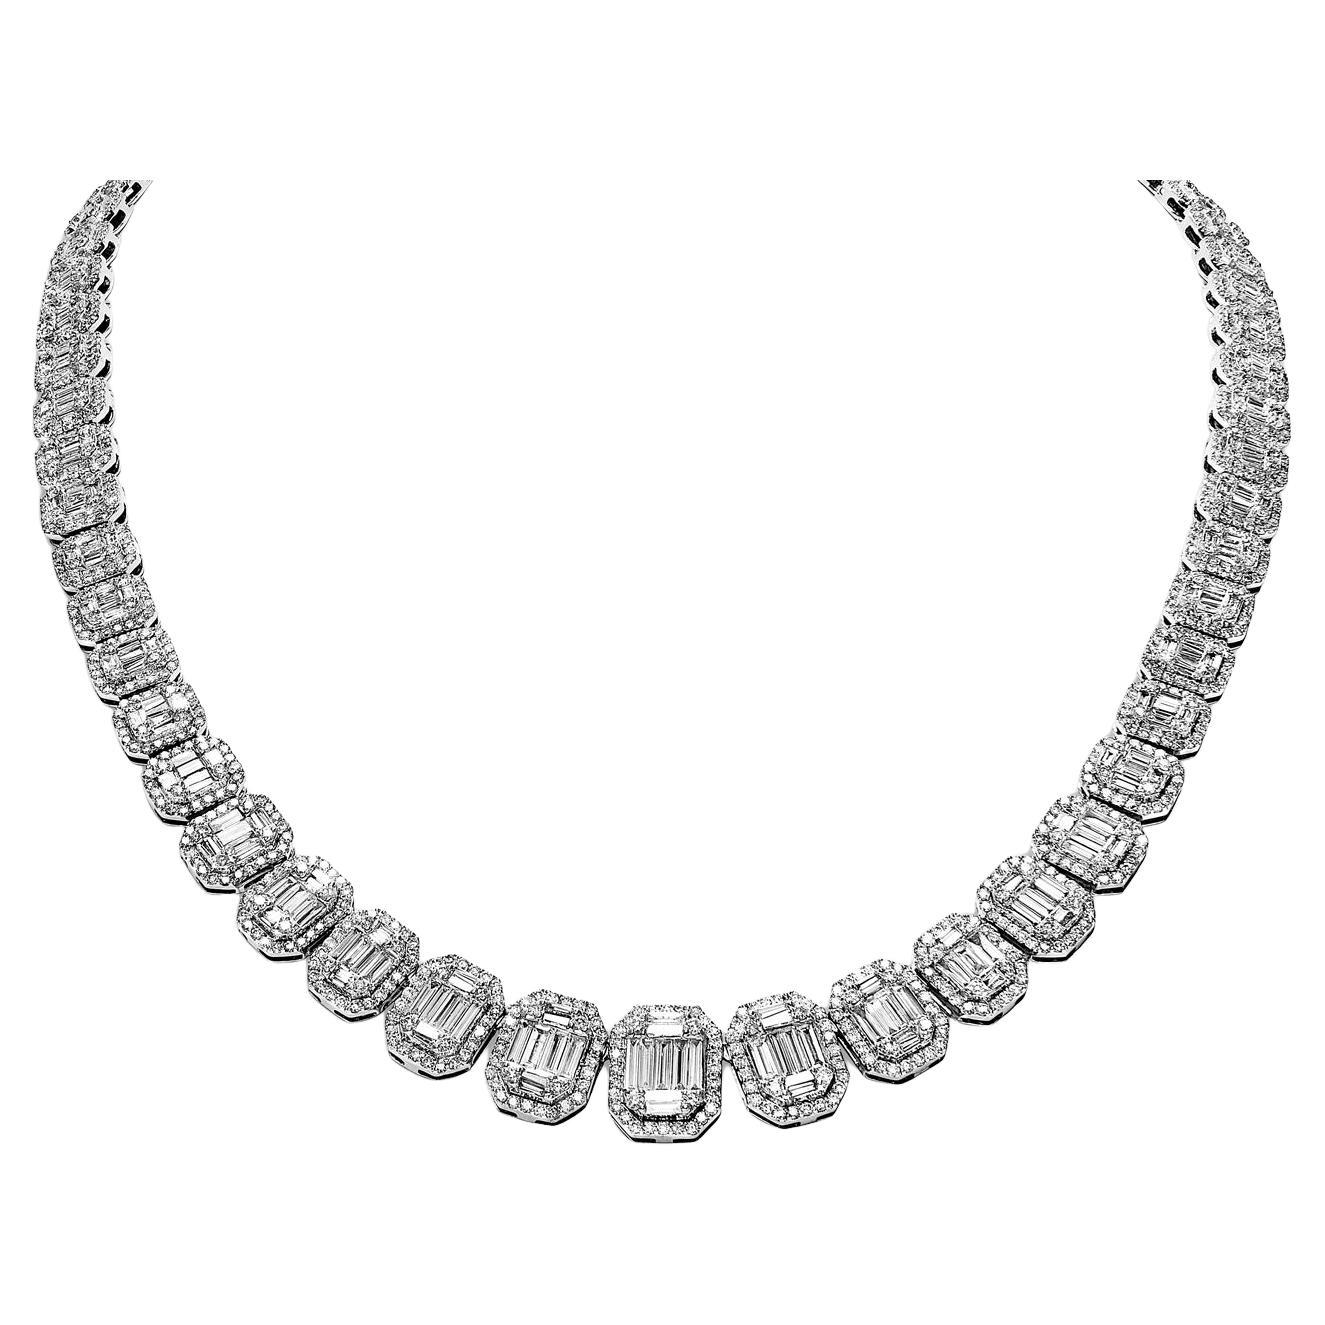 27 Carat Combined Mix Shape Diamond Necklace Certified For Sale